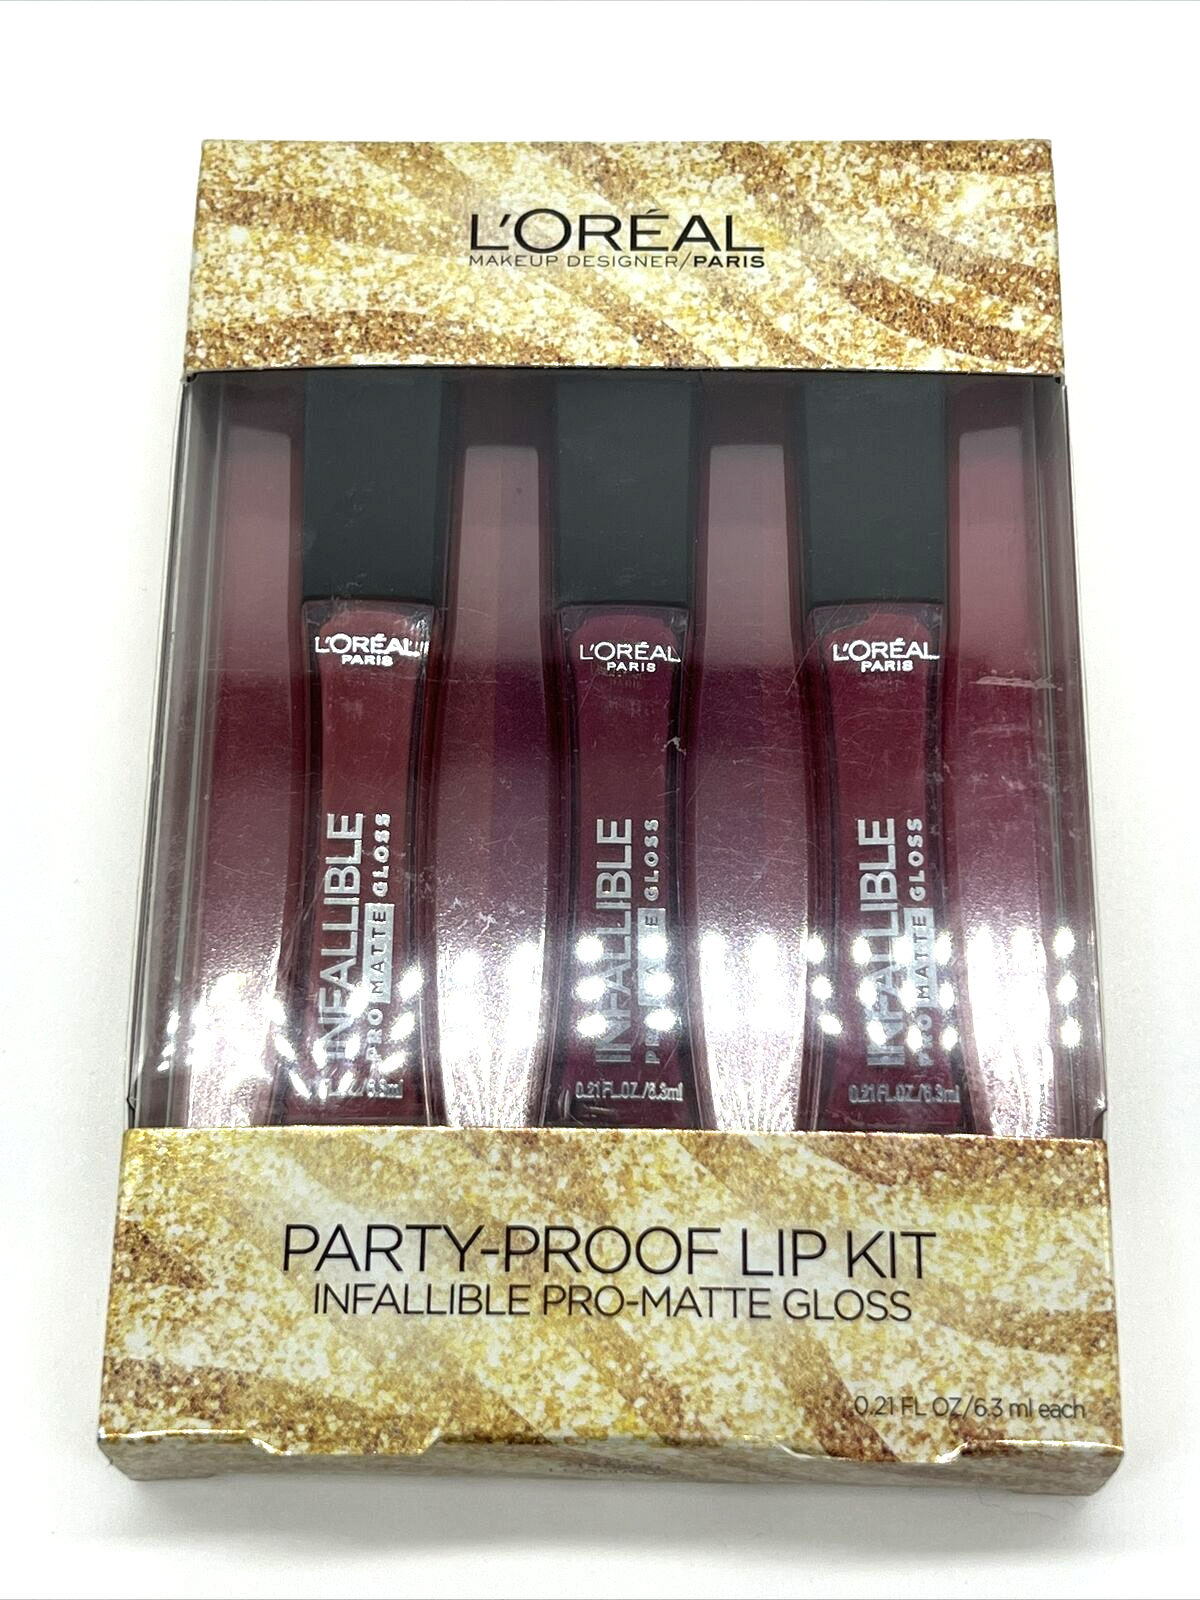 Loreal Party Proof Lip Kit 3 Infallible Pro-Matte Gloss Brand New Gift Box - $11.79